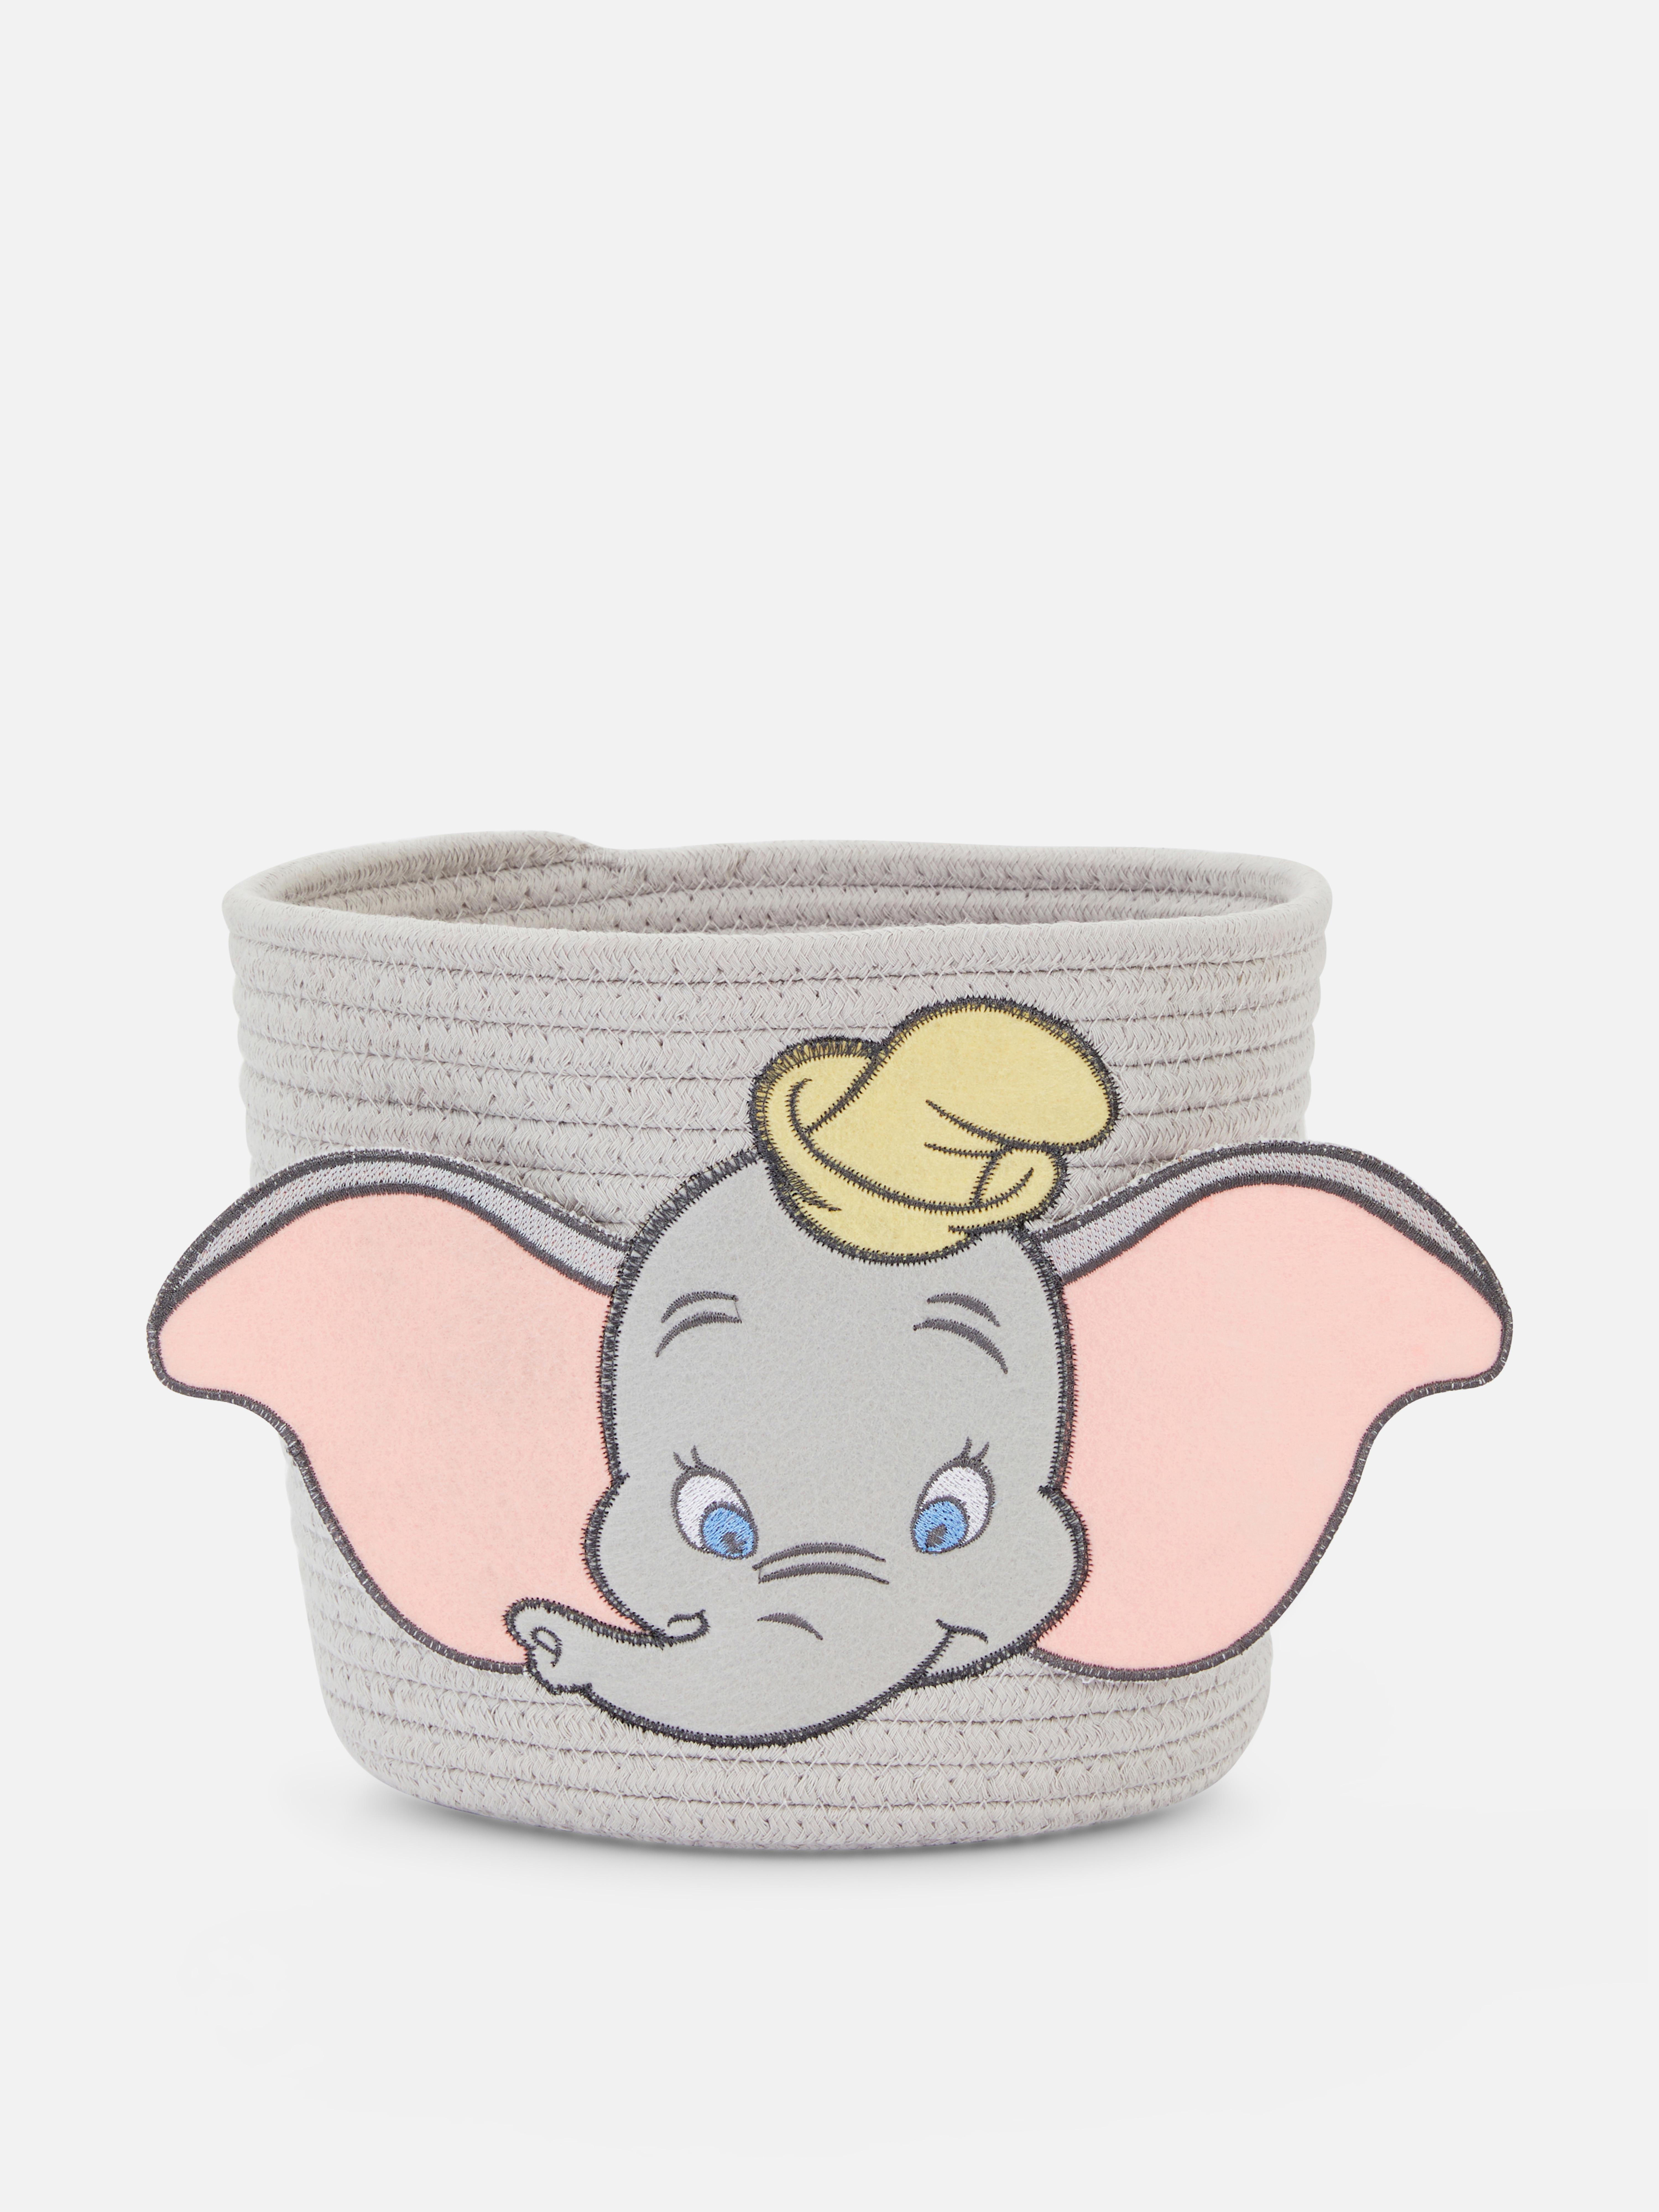 Disney’s Dumbo Woven Basket